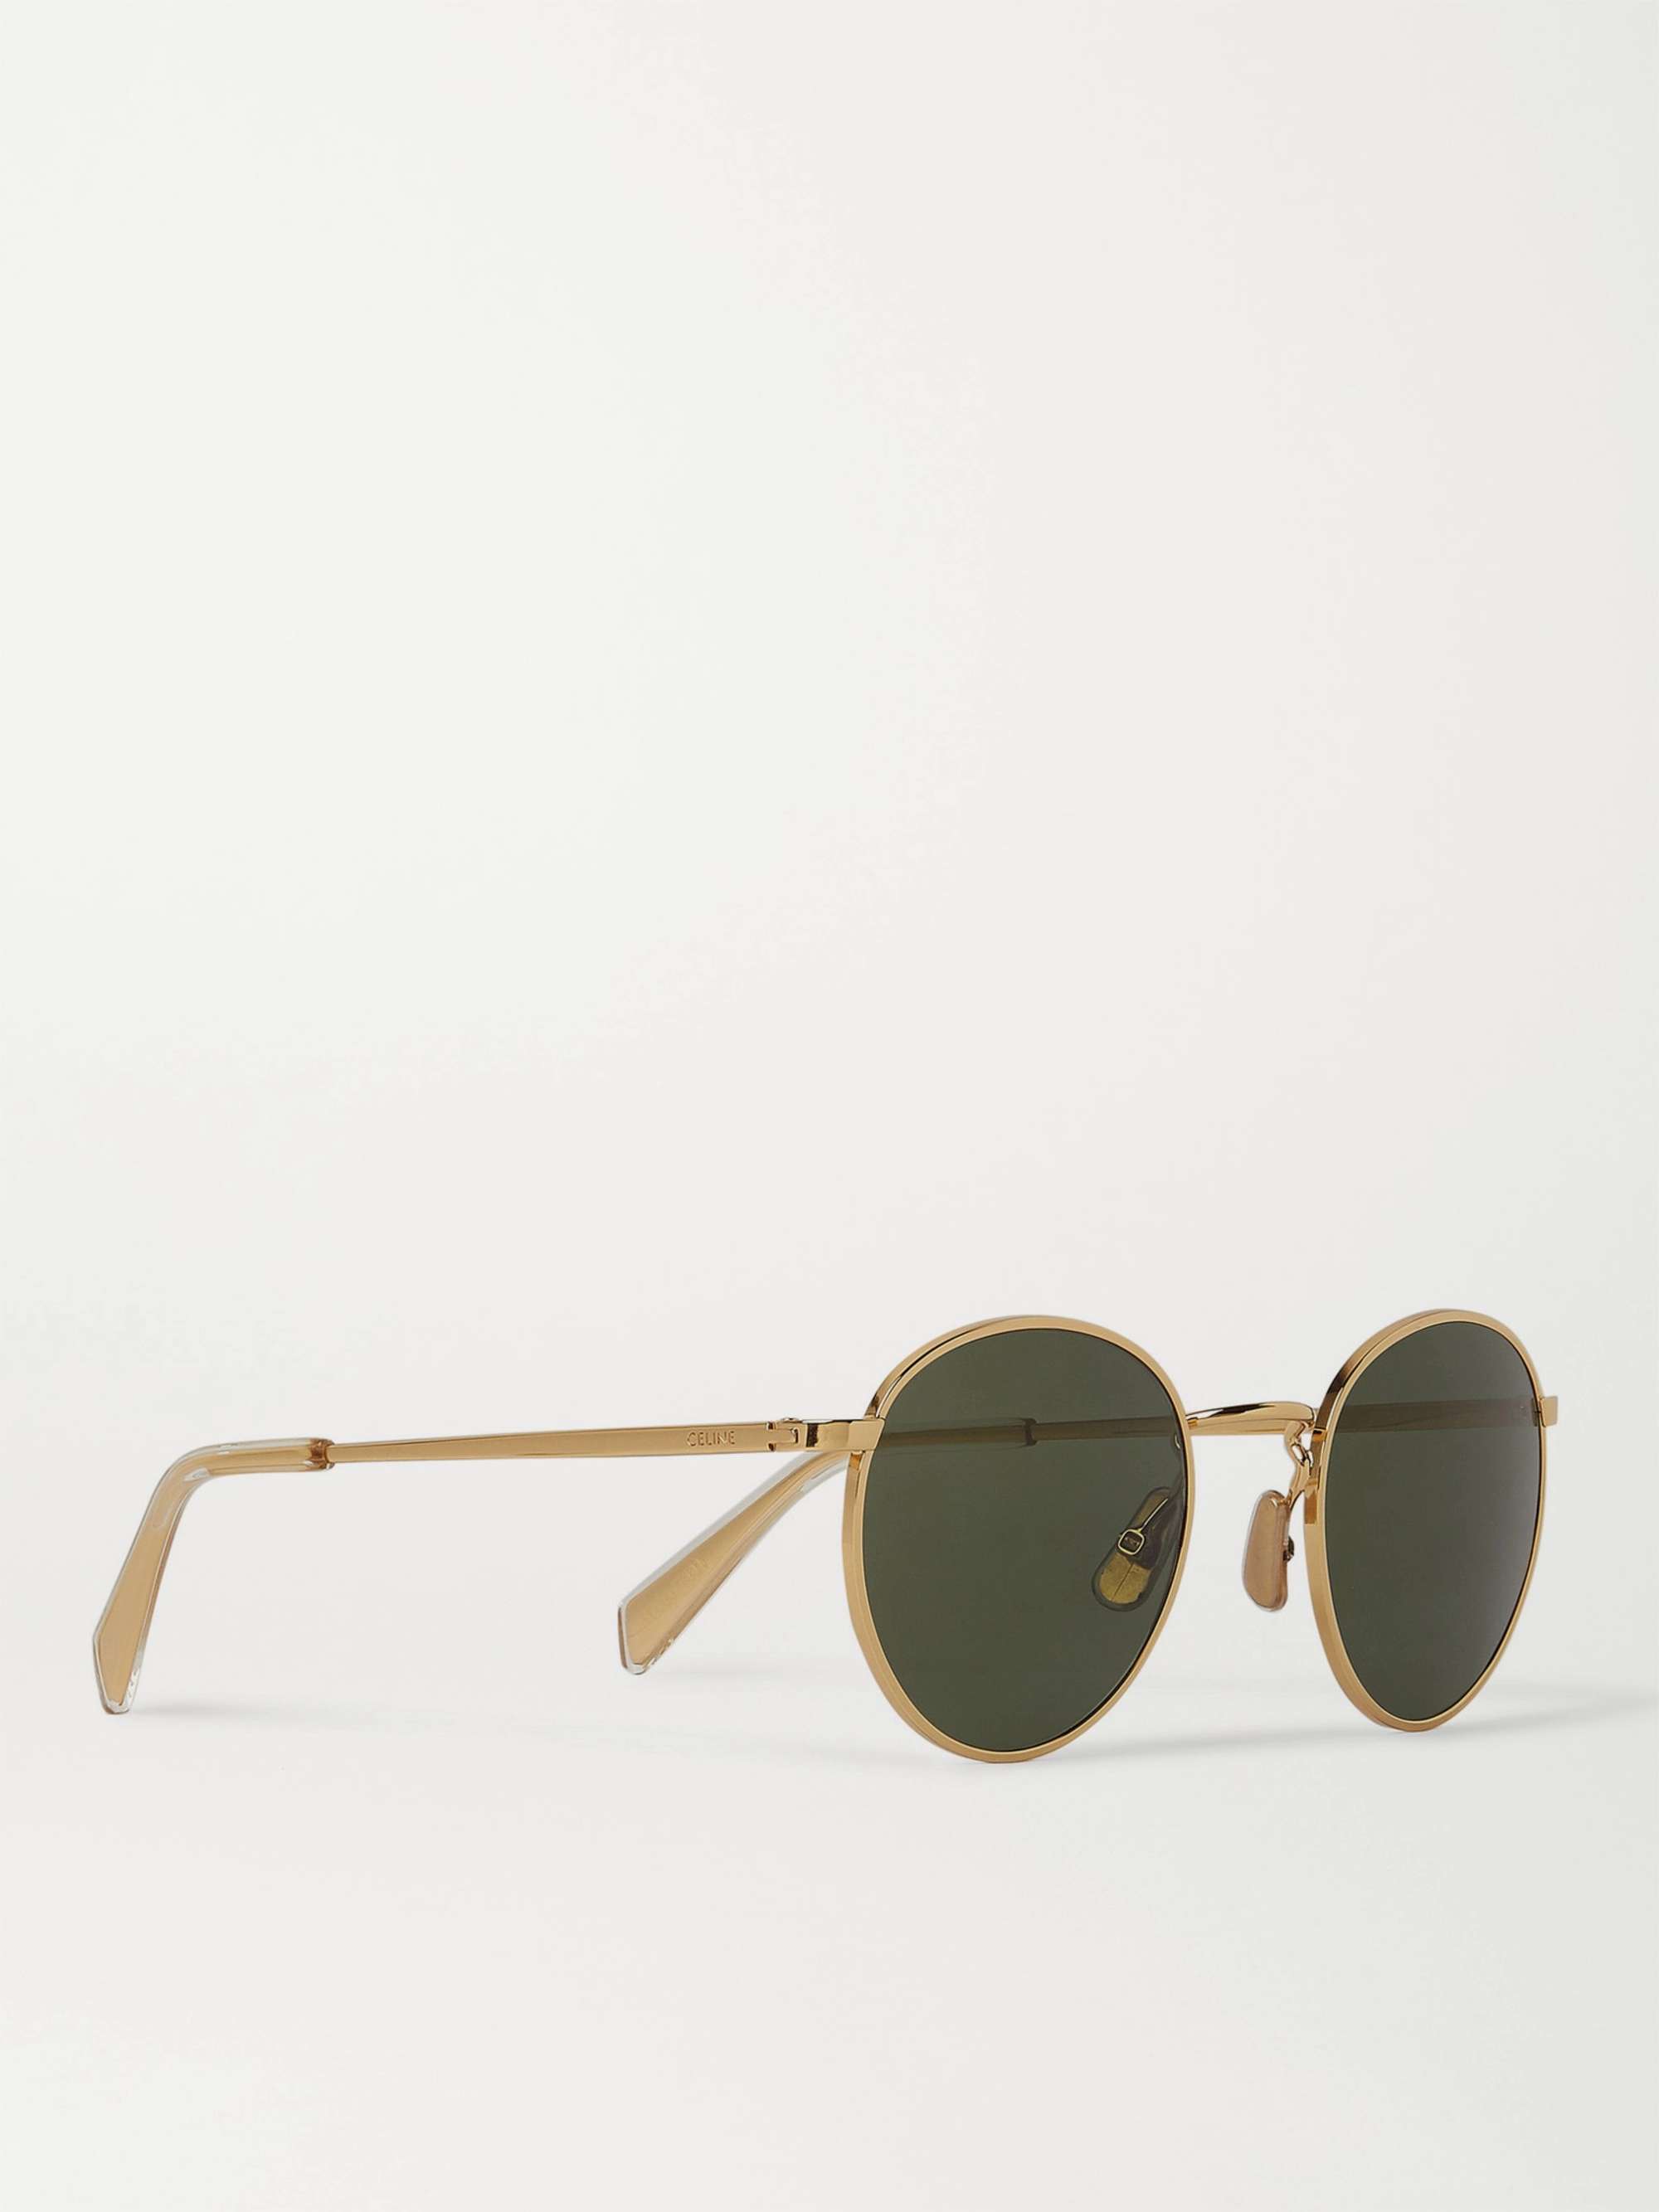 CELINE HOMME Round-Frame Gold-Tone Sunglasses